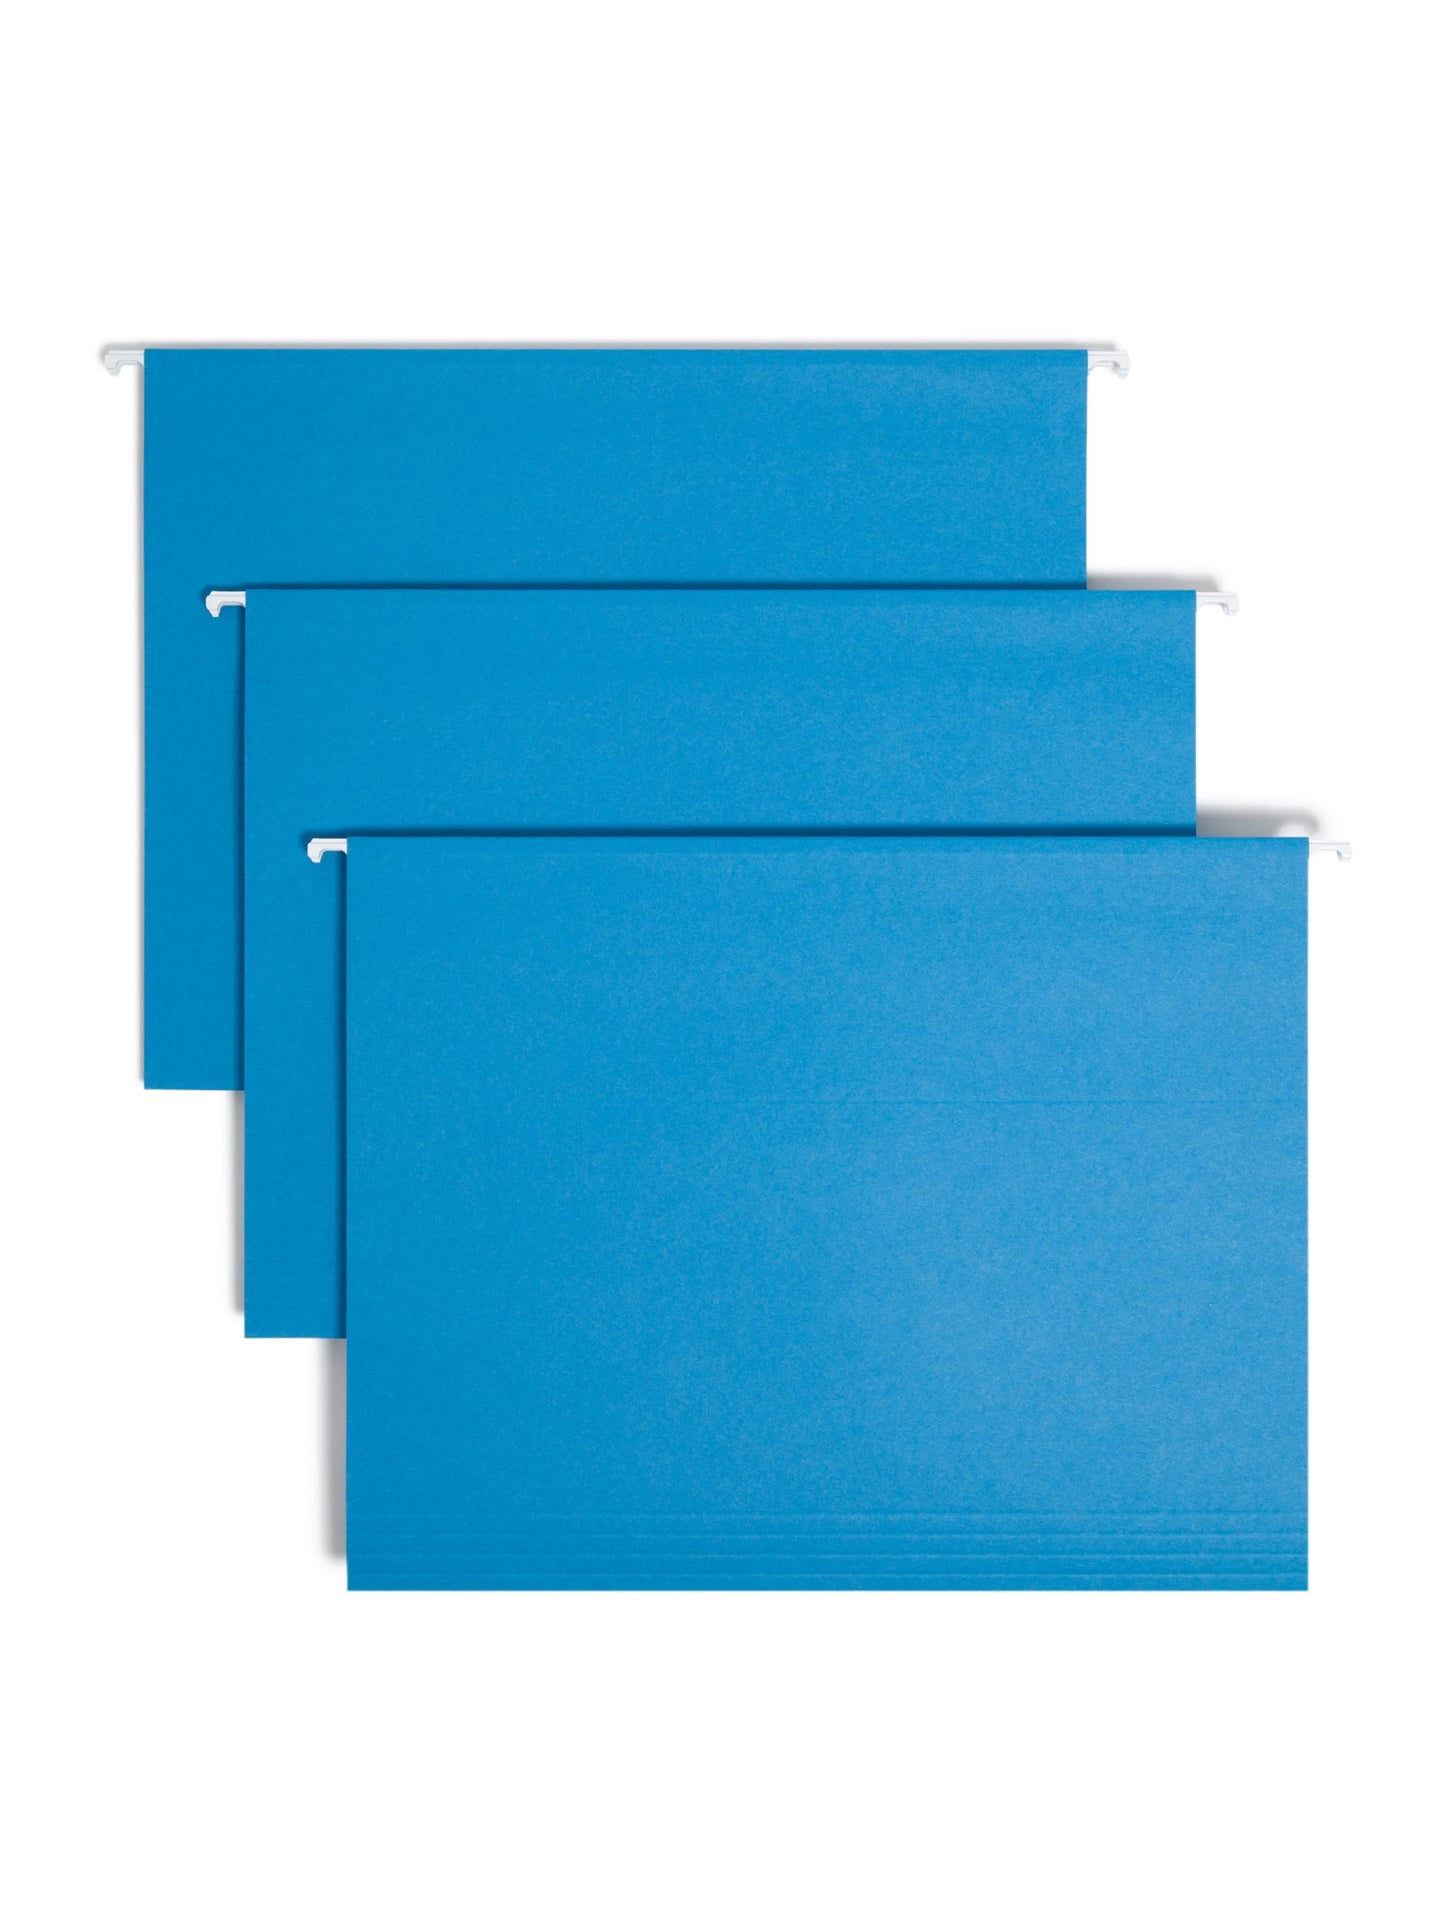 Standard Hanging File Folders with 1/5-Cut Tabs, Blue Color, Letter Size, Set of 25, 086486640688